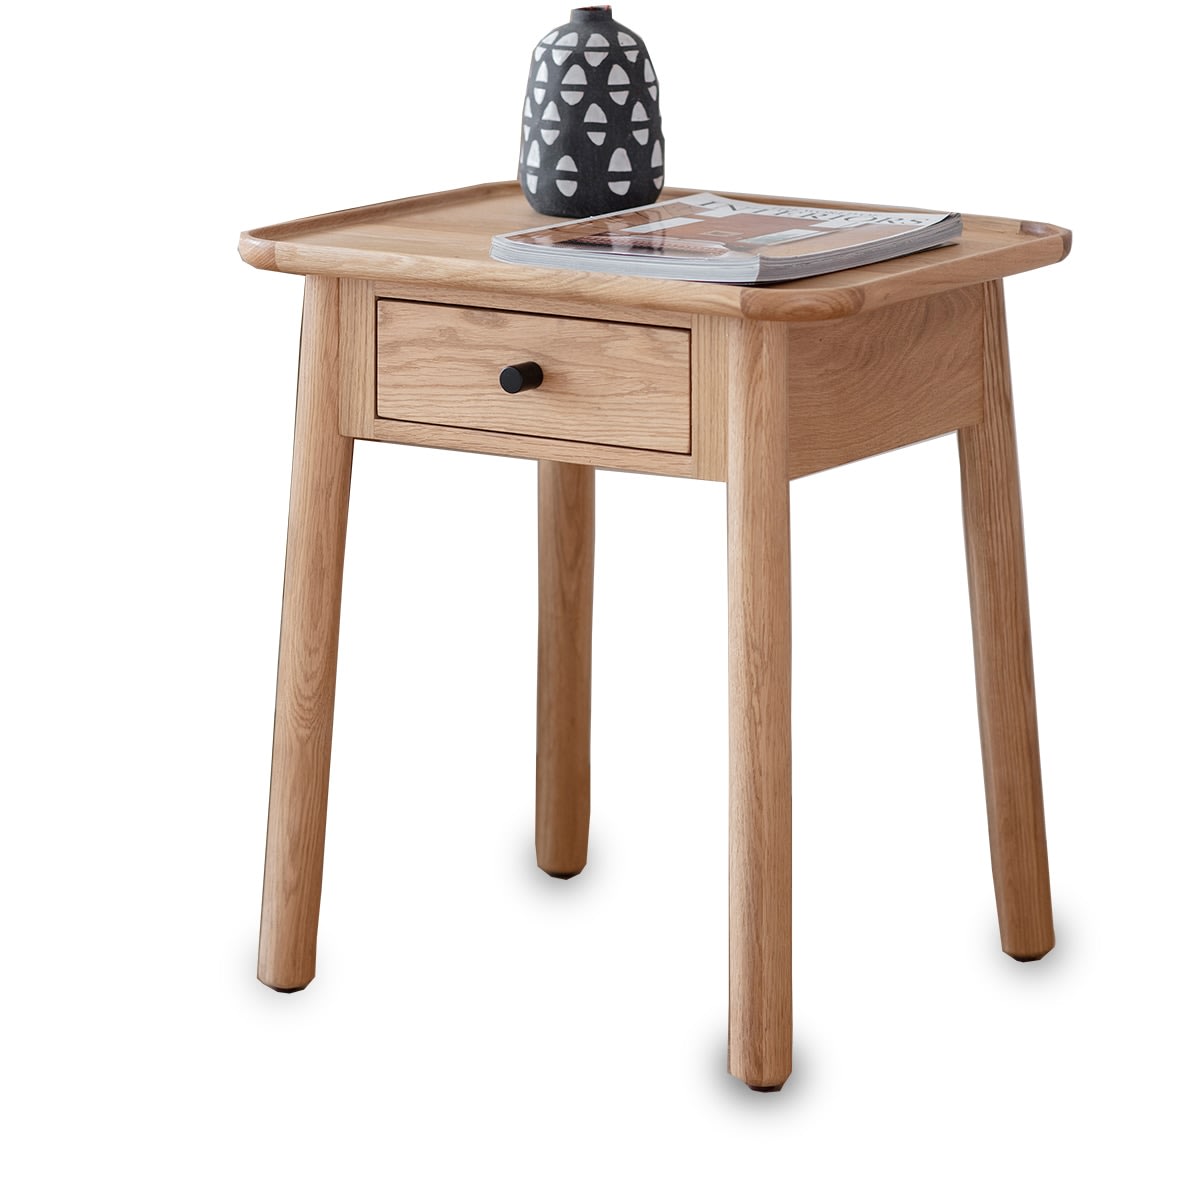 Kingham Oak 1 Drawer Bedside Table by Gallery Direct